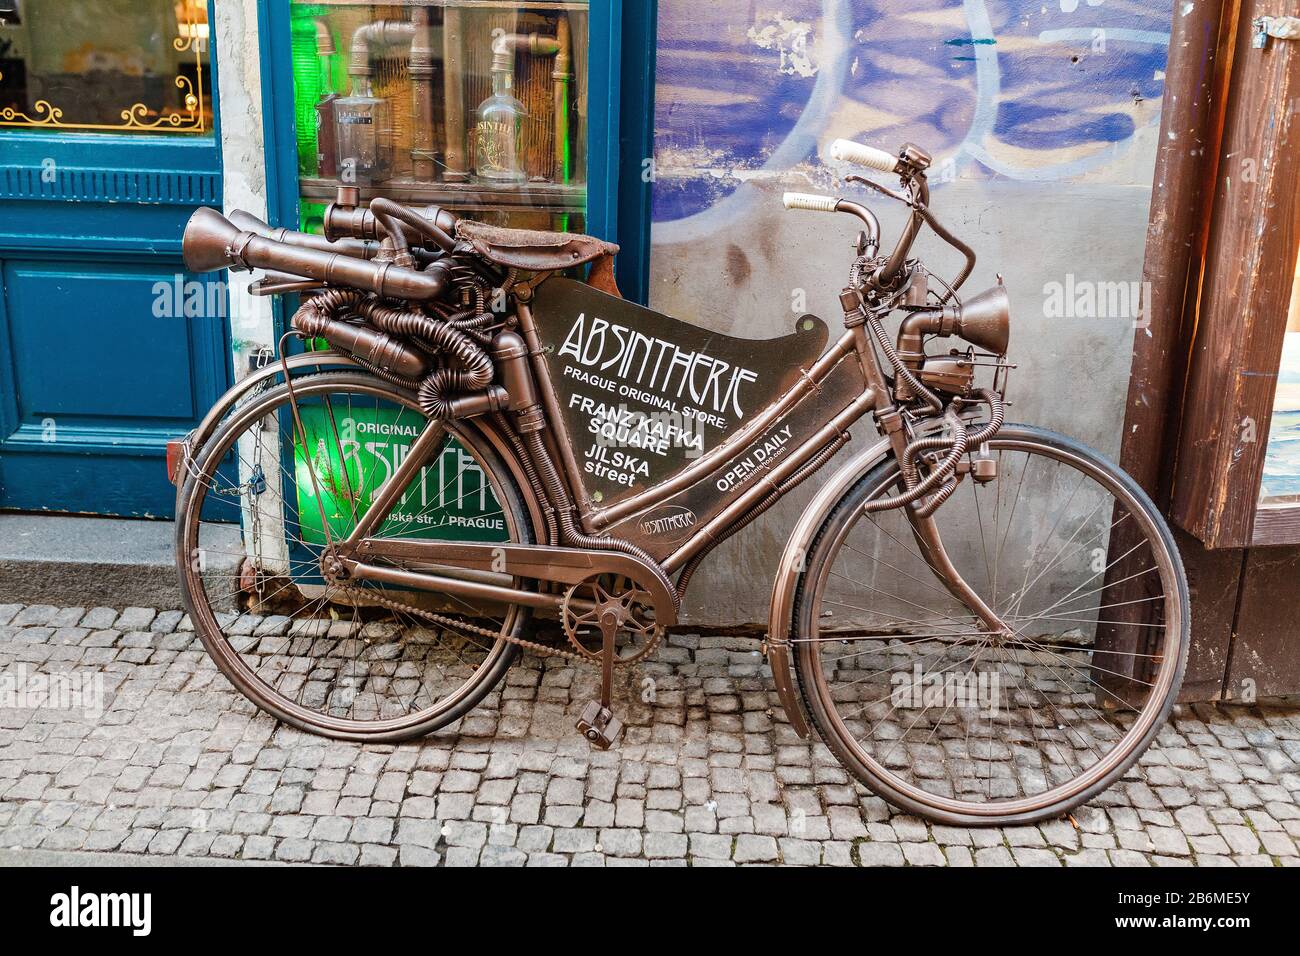 07 DECEMBER 2017, PRAGUE, CZECH REPUBLIC: bicycle in a steampunk style near absinthe shop Stock Photo